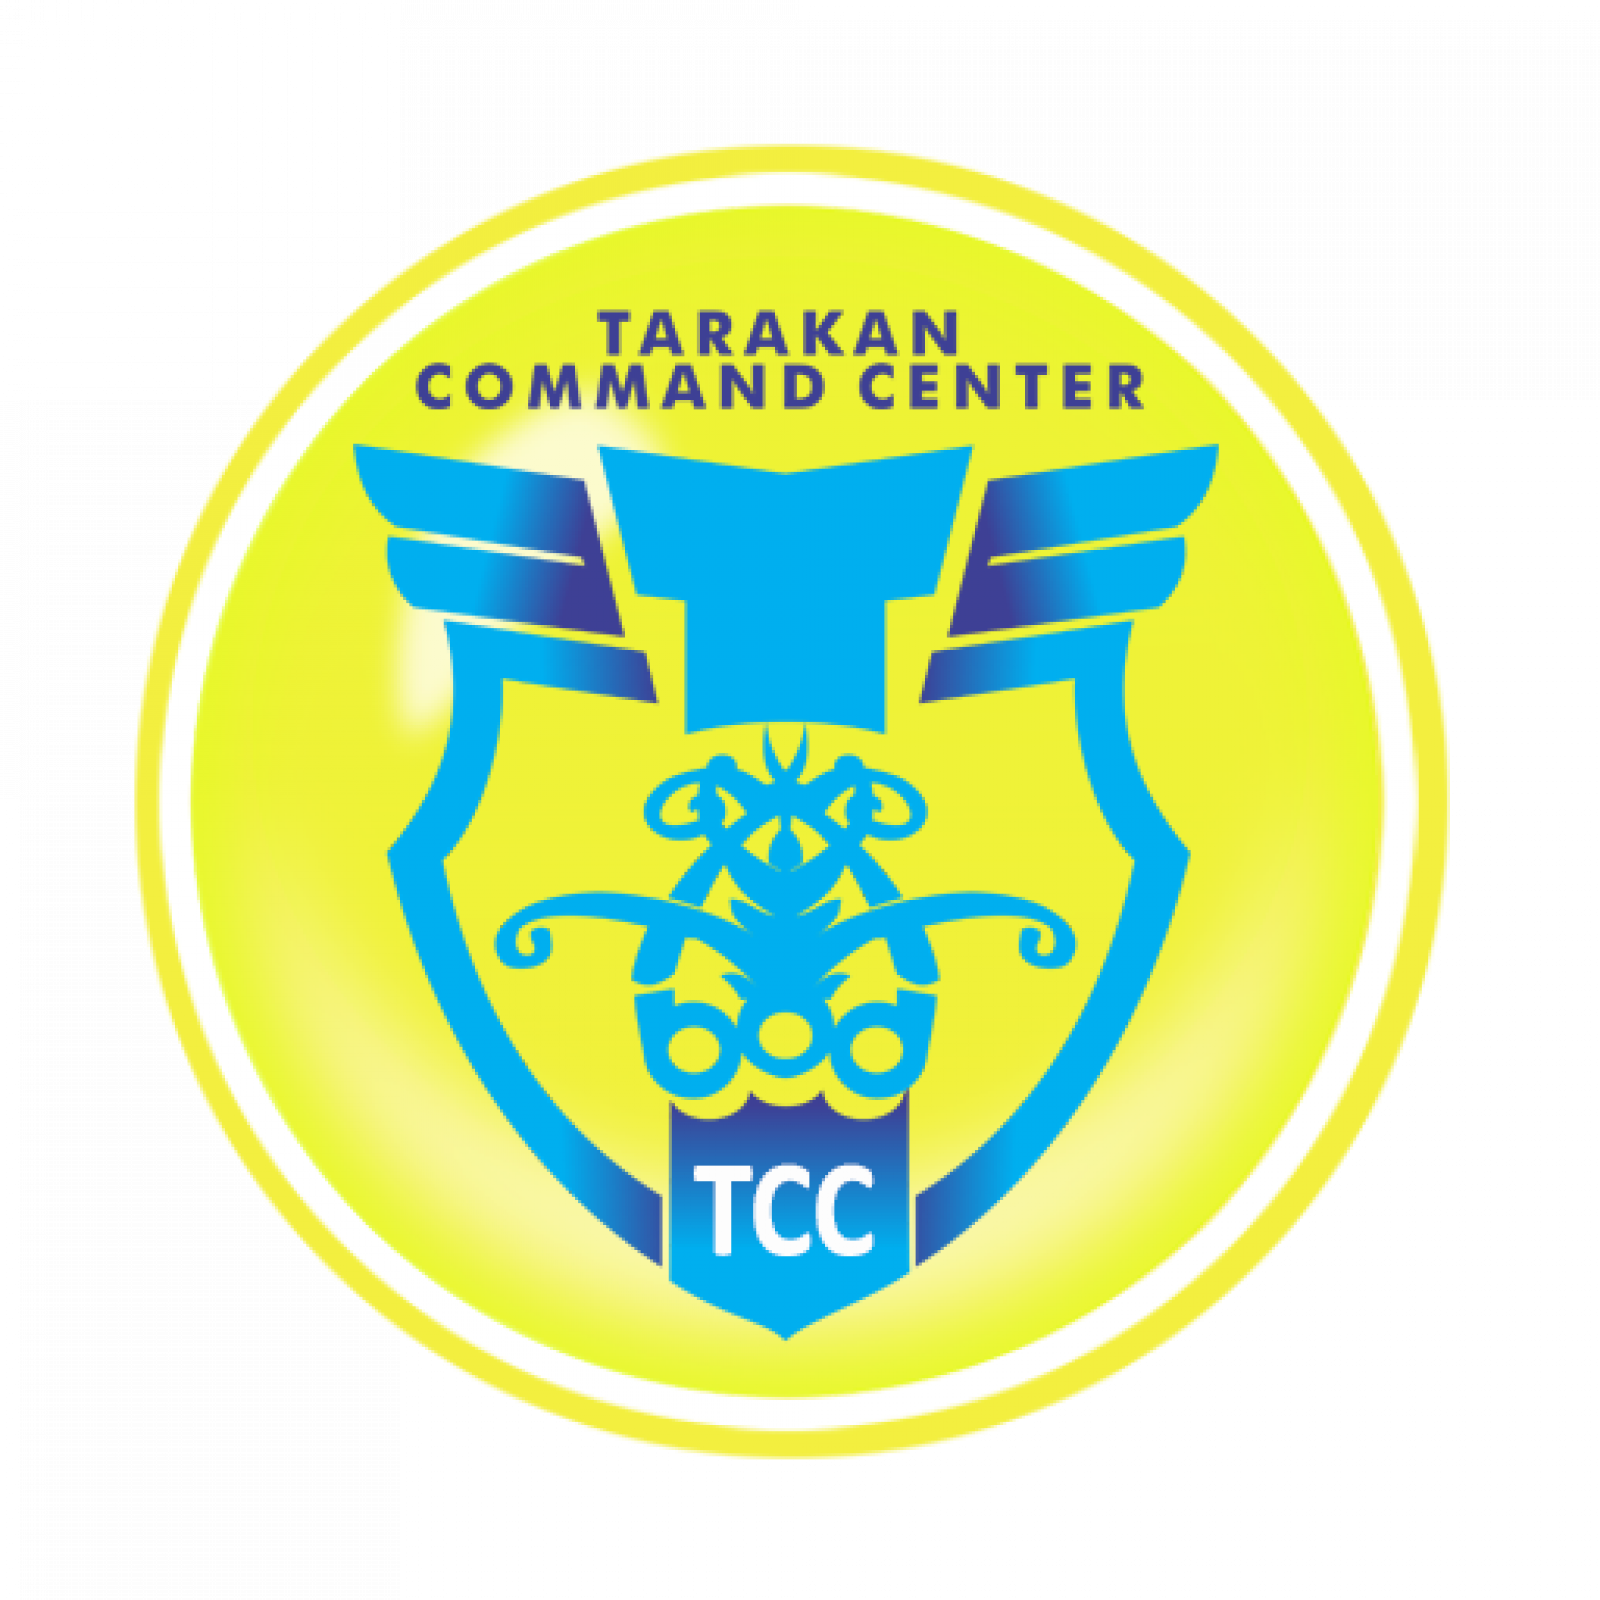 Tarakan Command Center